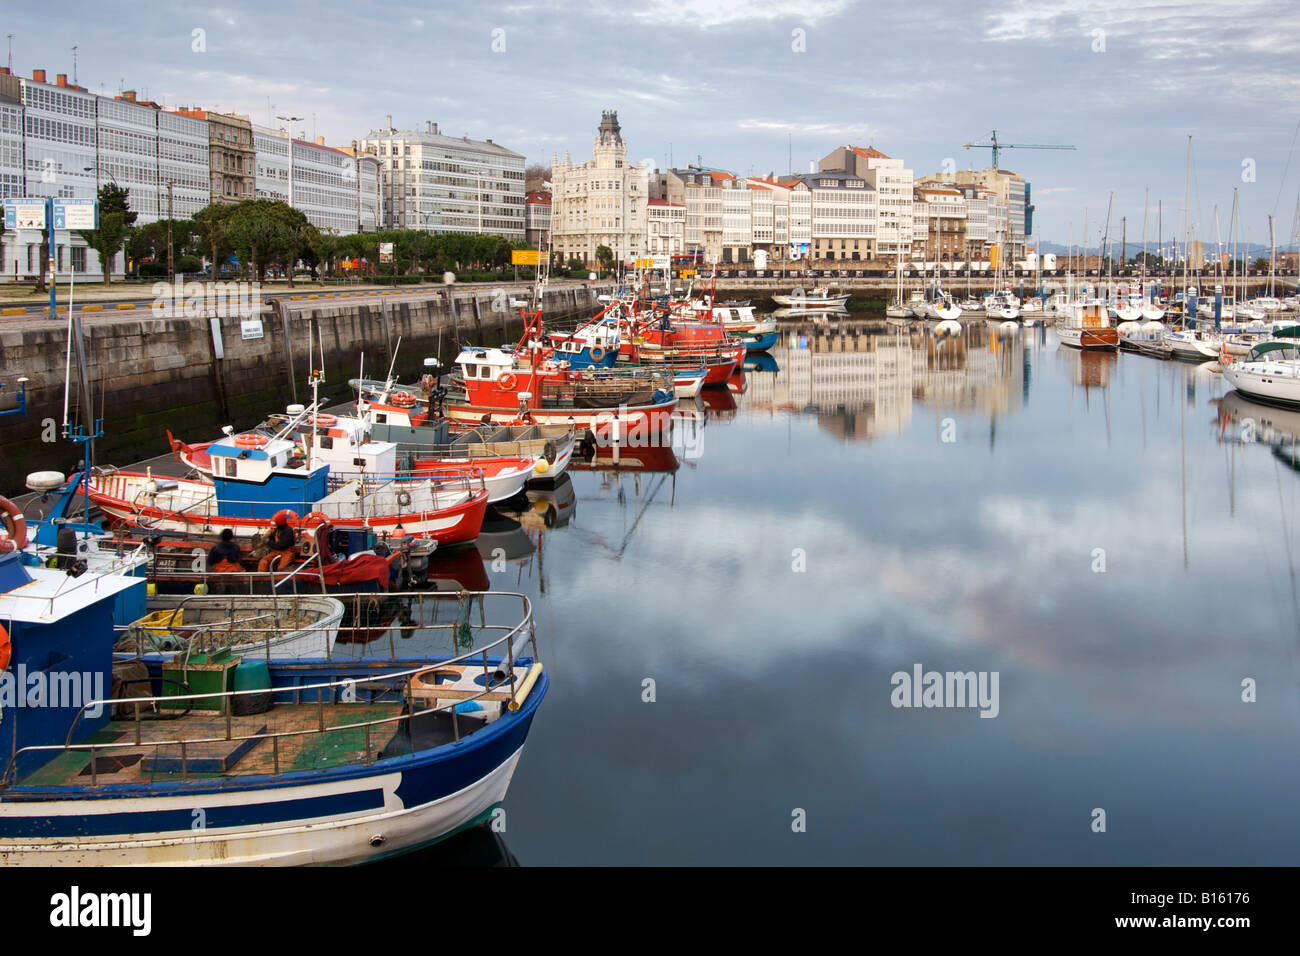 Boats in the marina in the town of La Coruña in Spain's Galicia region. Stock Photo